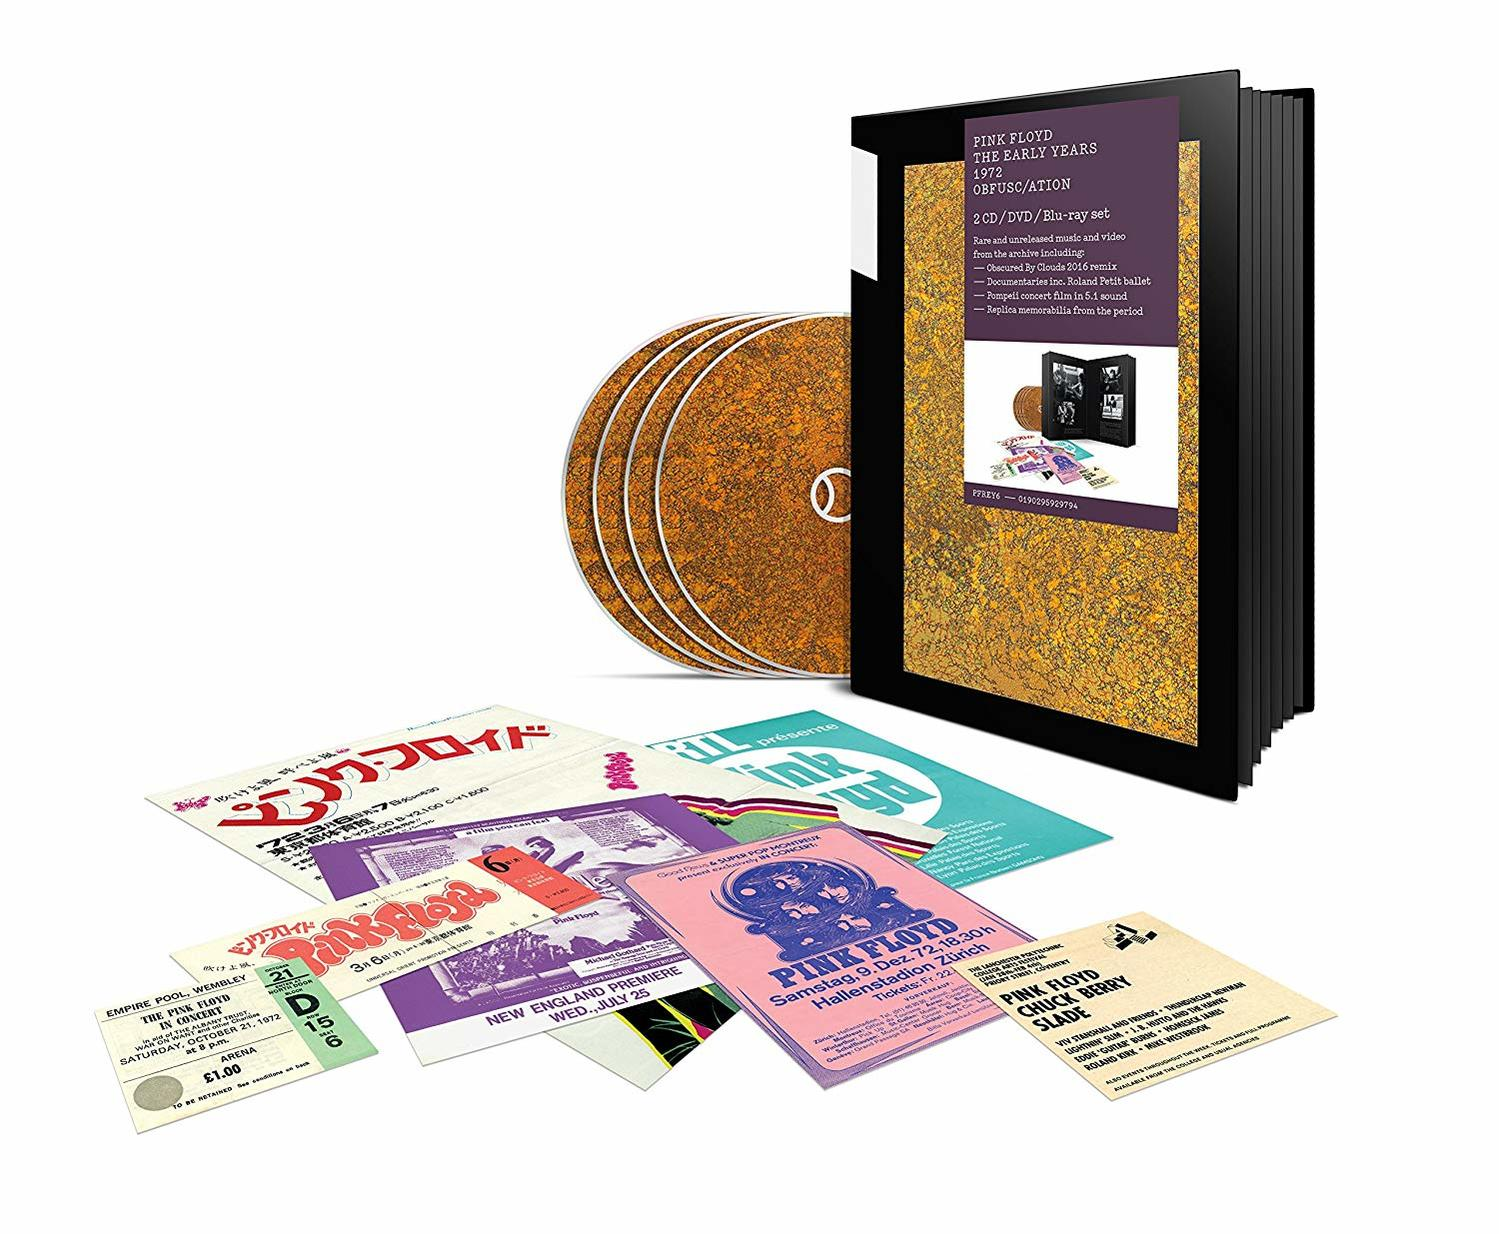 OBFUSC/ATION (CD + - Pink Blu-ray - Floyd 1972 Disc)